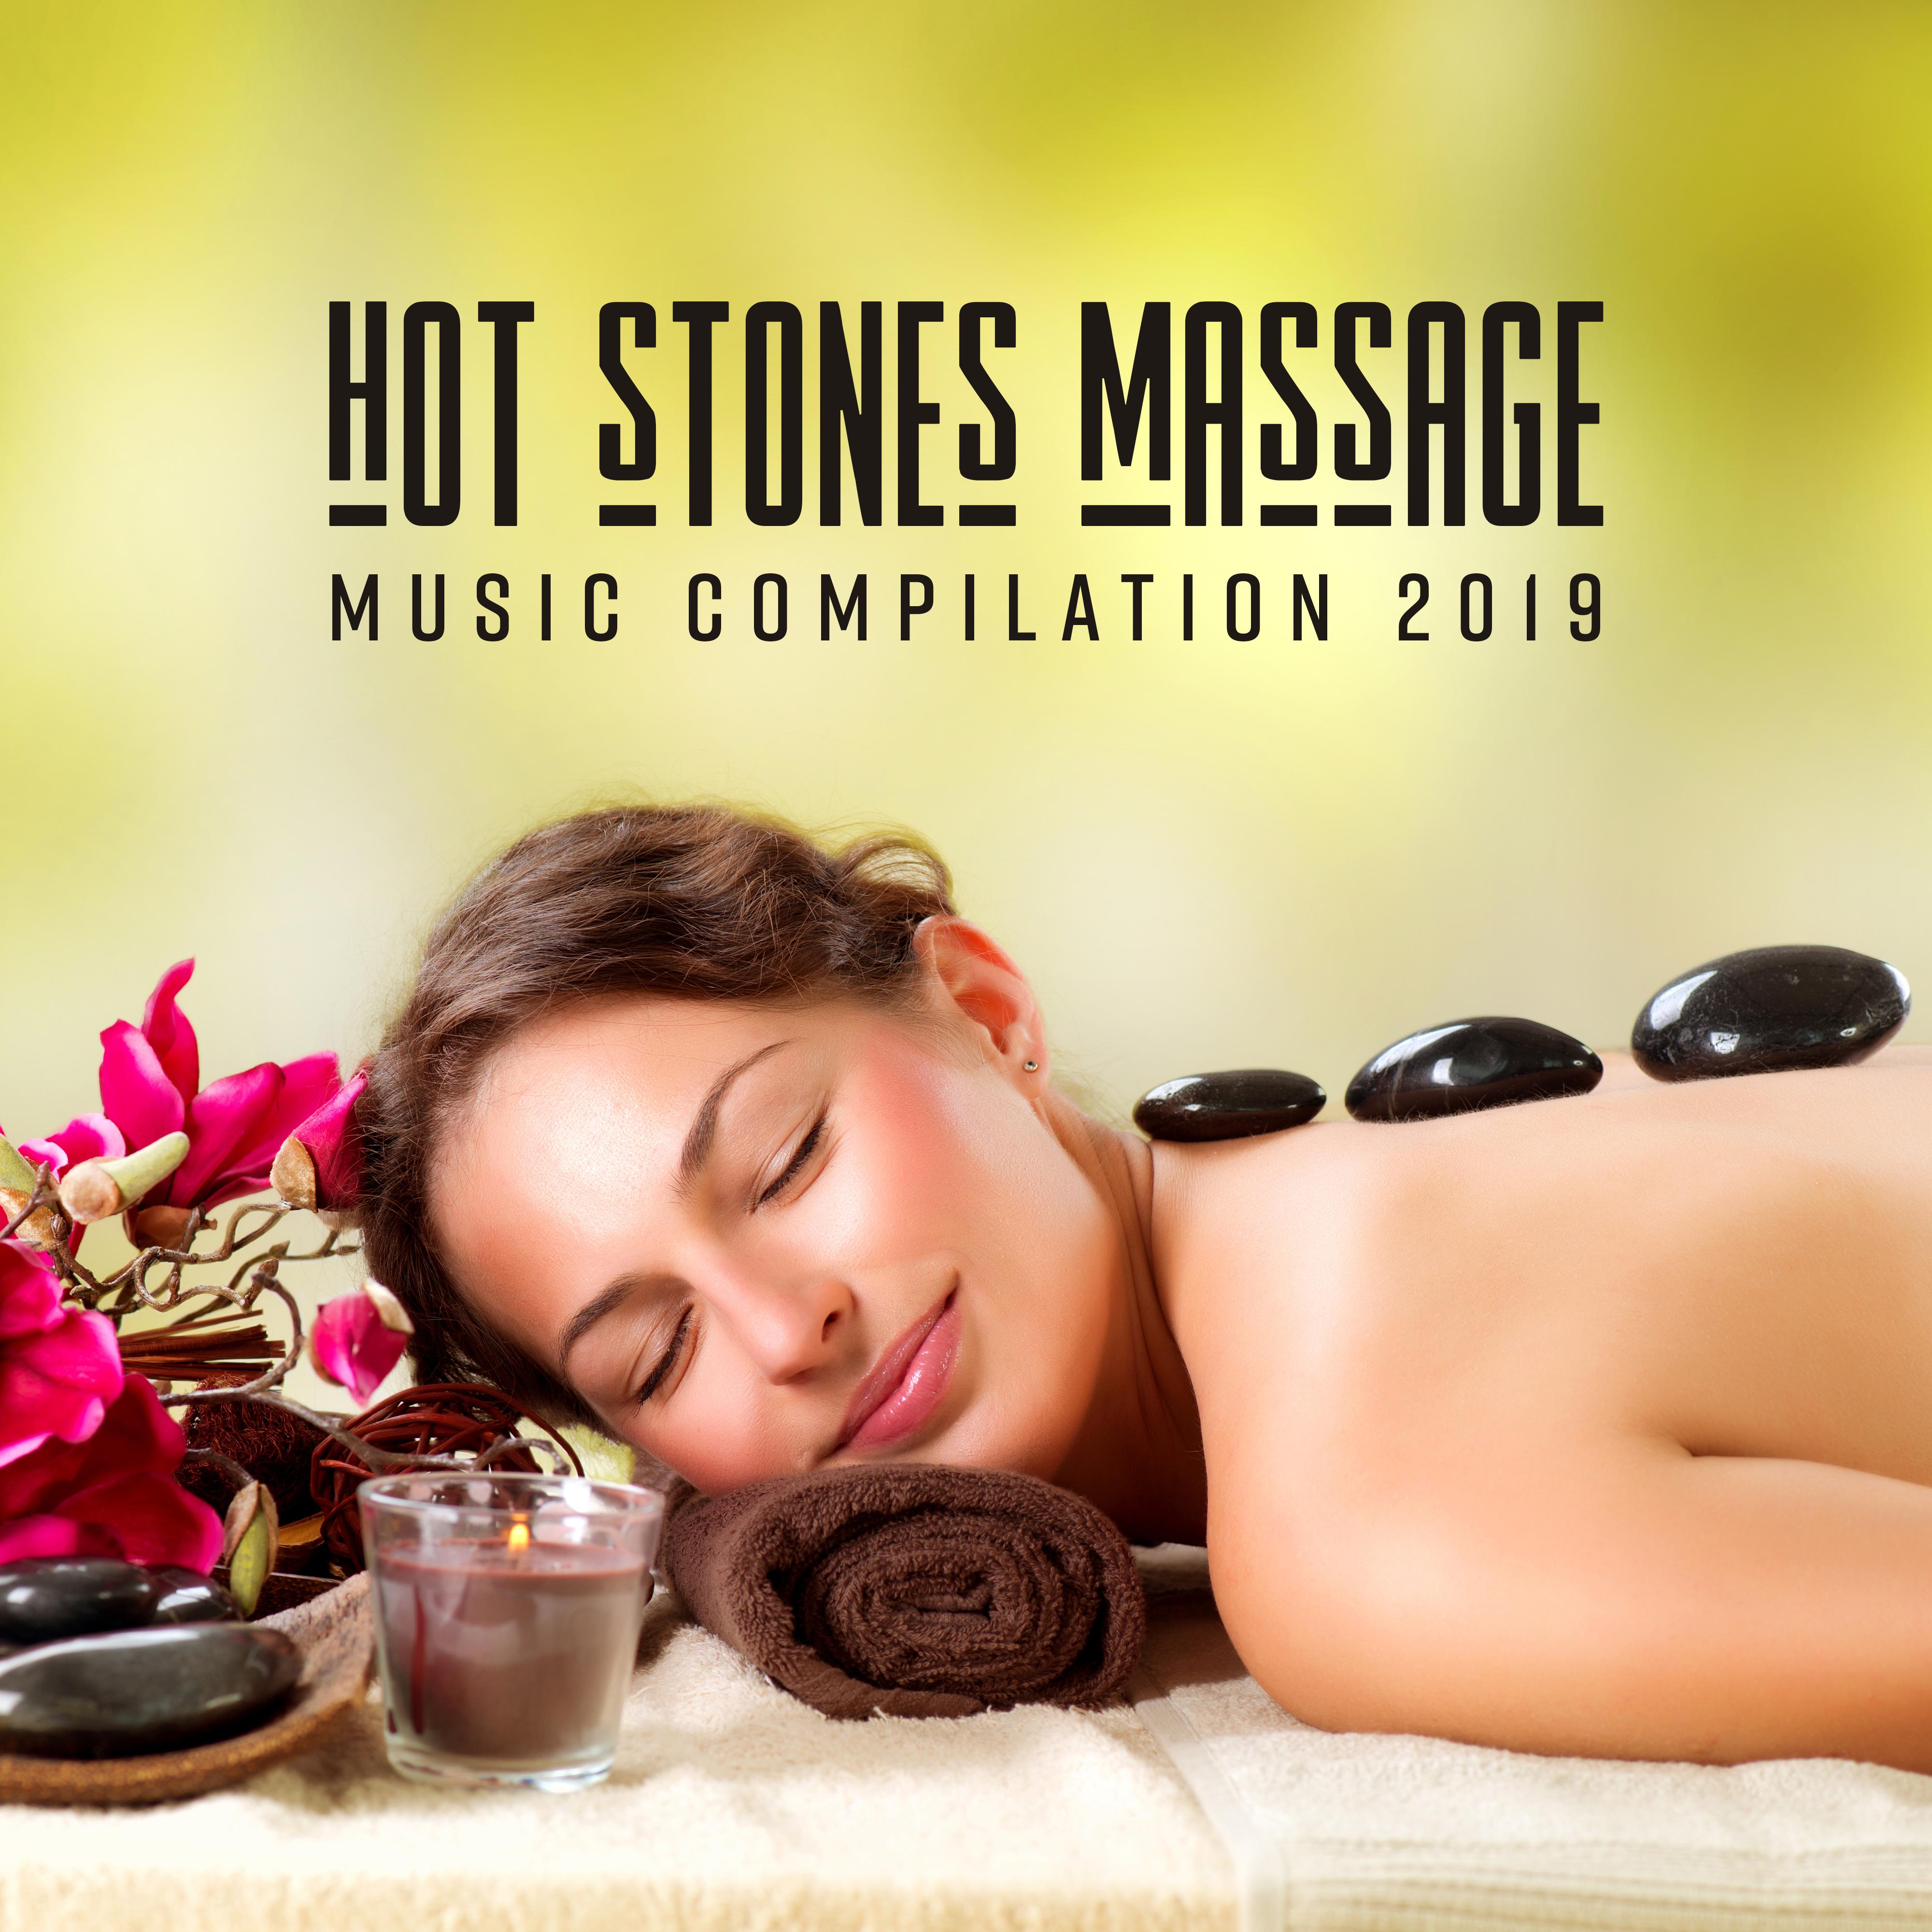 Hot Stones Massage Music Compilation 2019